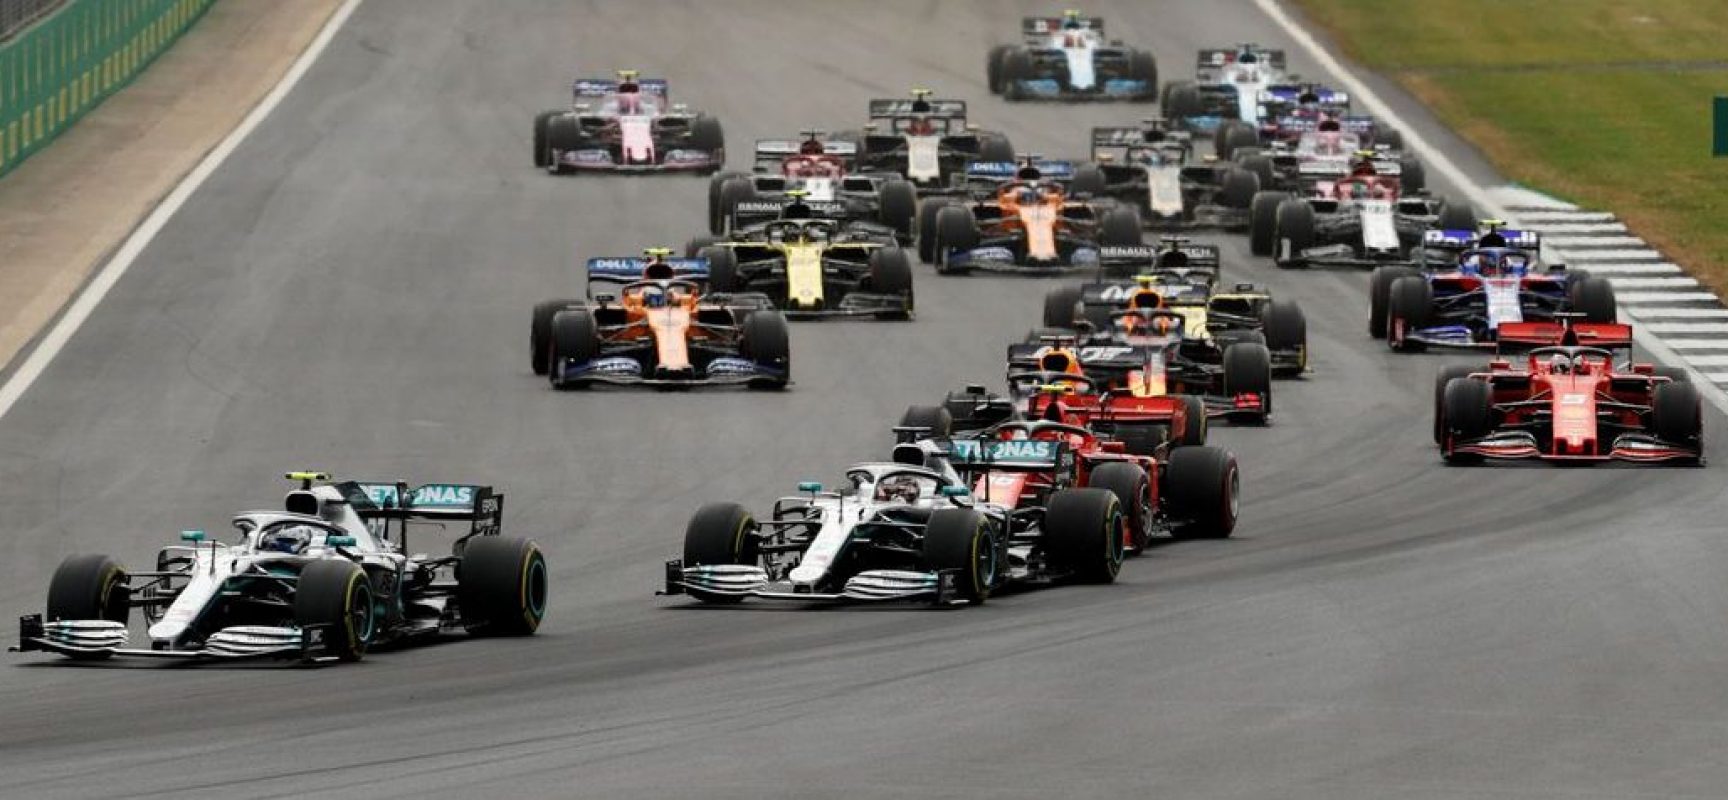 Valtteri Bottas larga na frente no GP da Áustria